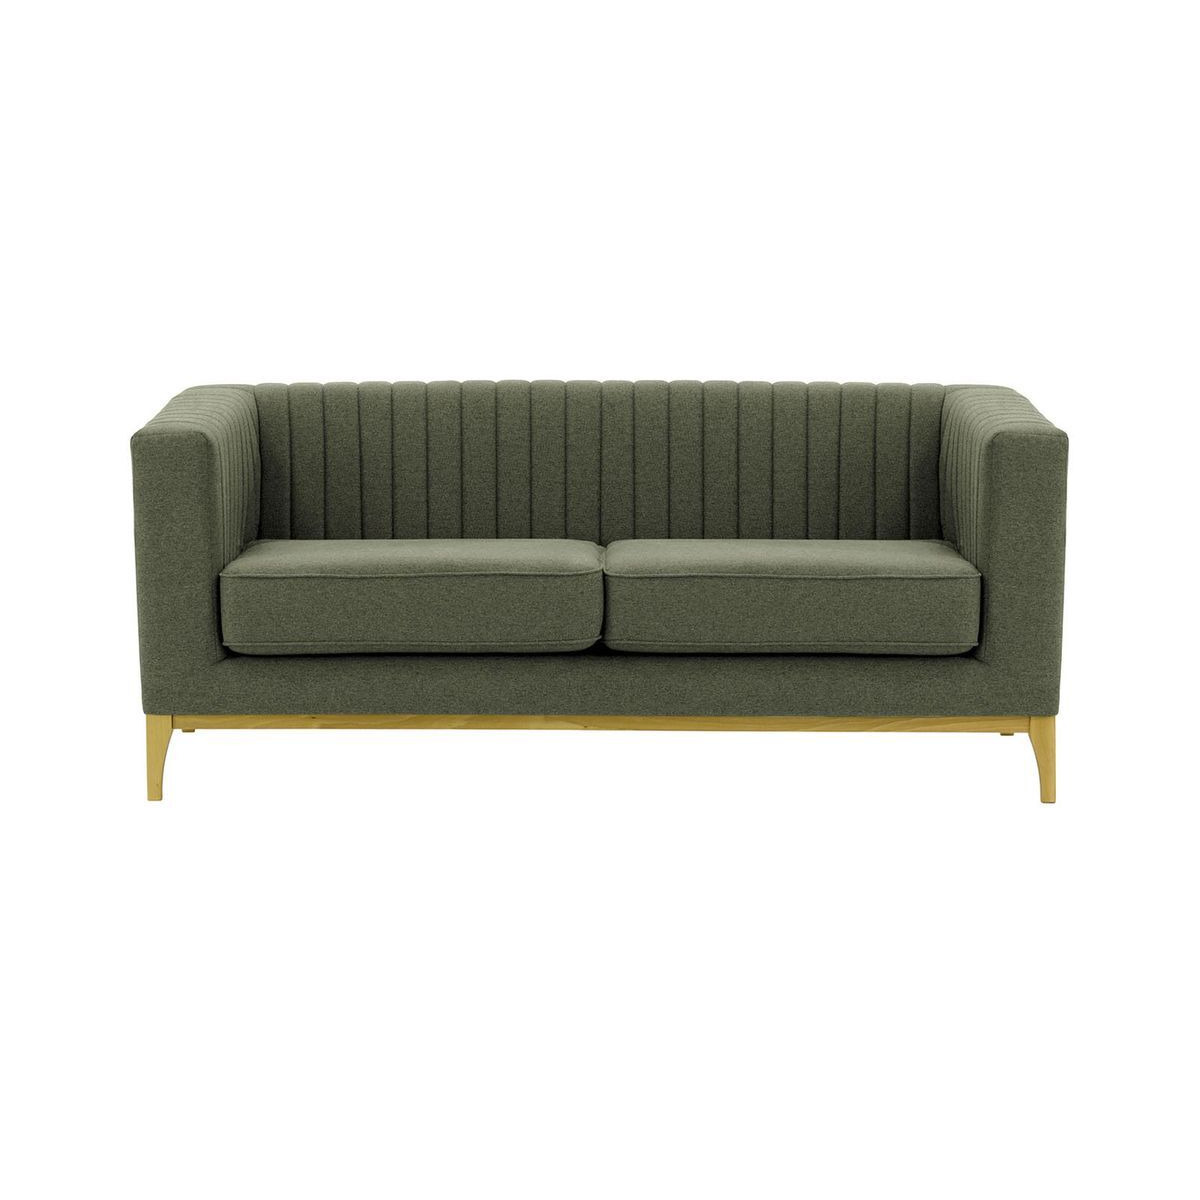 Slender Wood 2 Seater Sofa, dark green, Leg colour: like oak - image 1